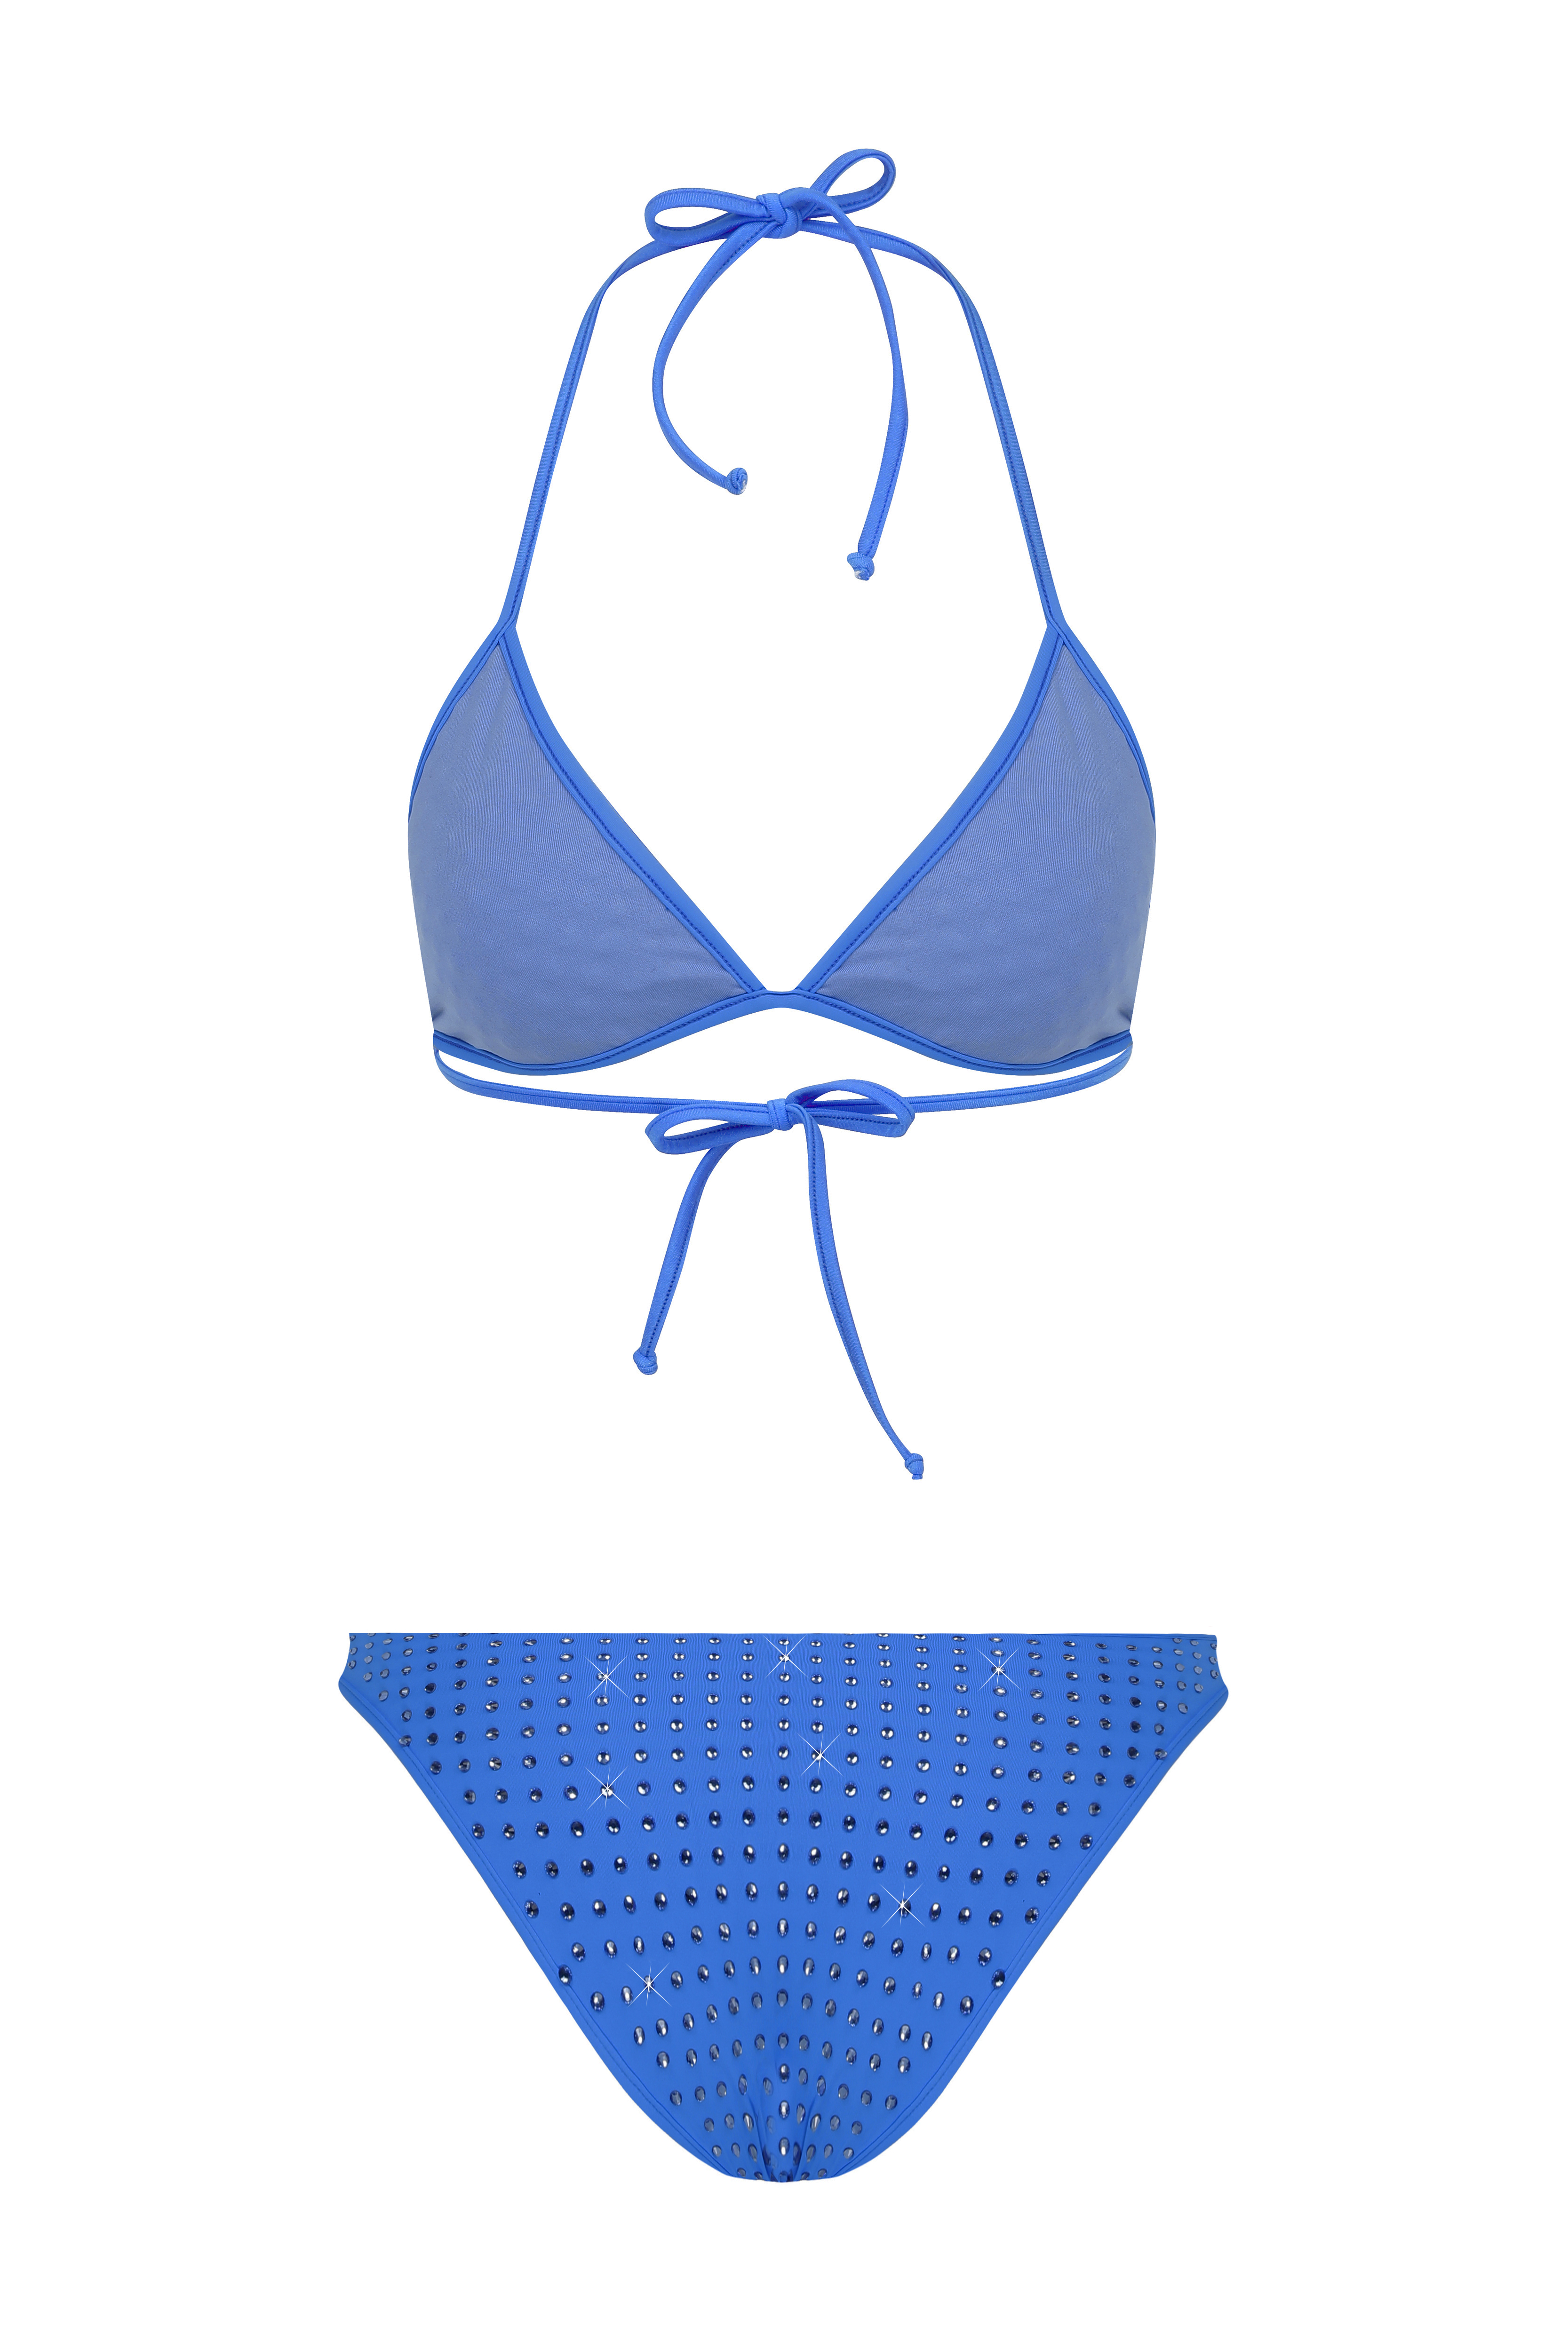 SHINY Stone Printed Blue Bikini Set